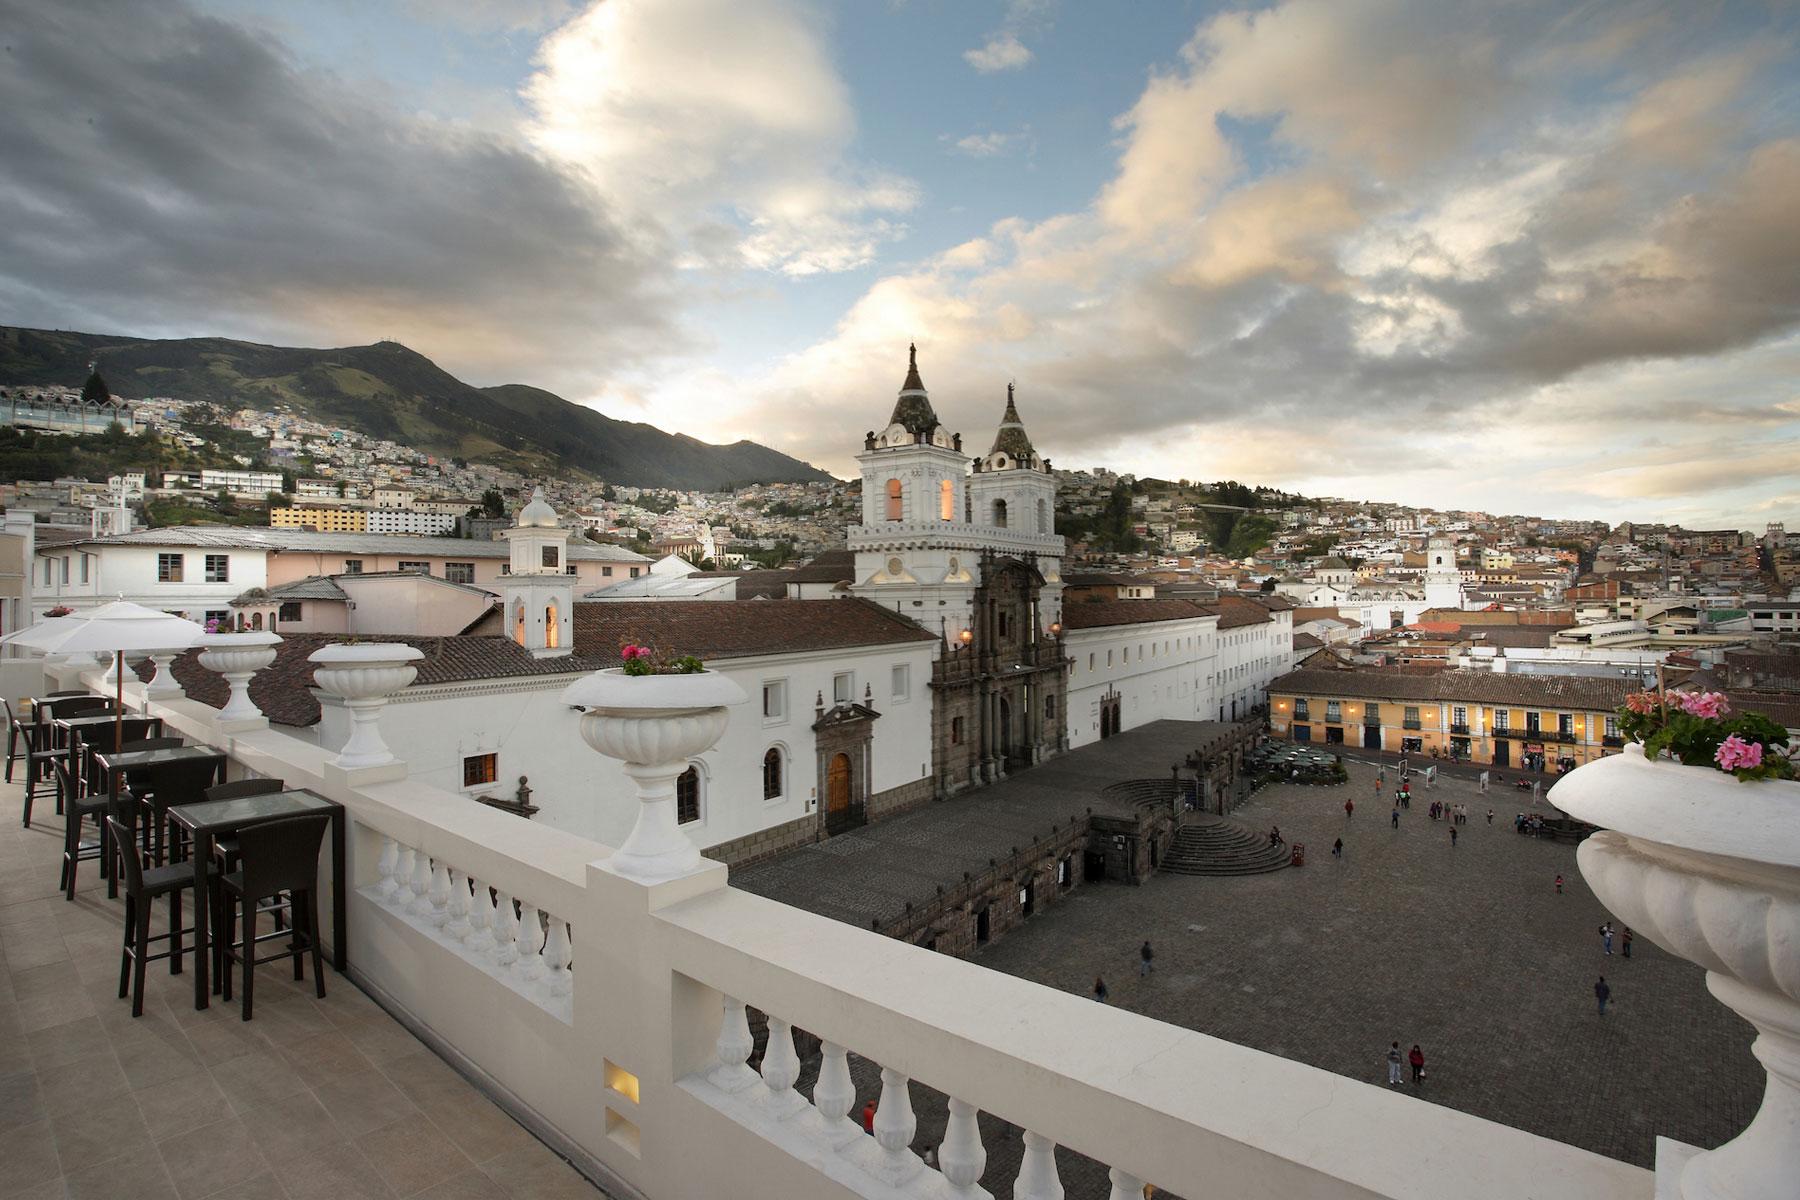 How To Spend 3 Days In Quito, Ecuador – Fodors Travel Guide